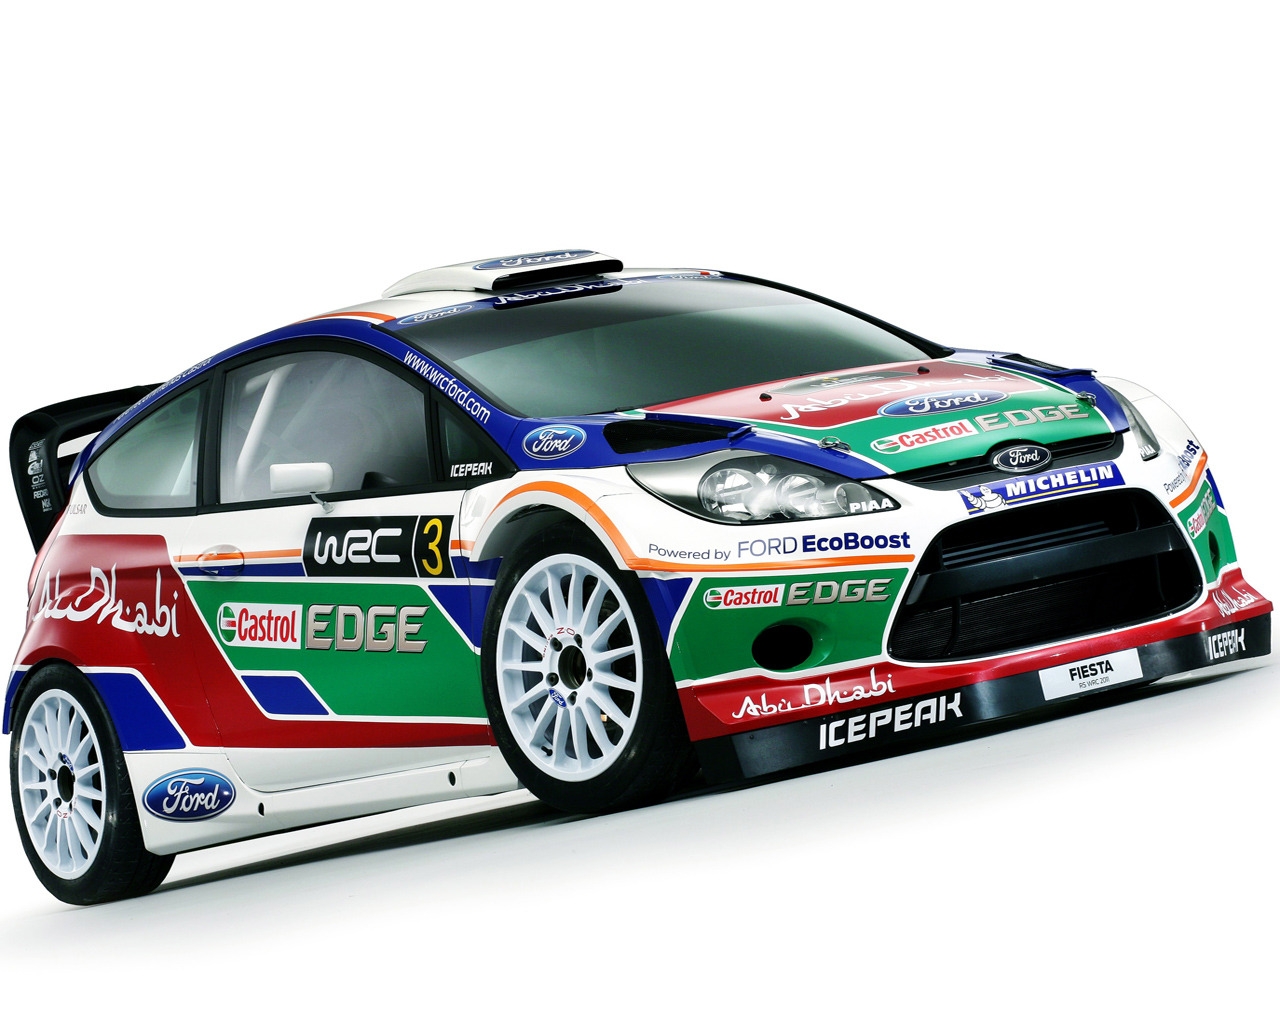 Ford Fiesta WRC for 1280 x 1024 resolution